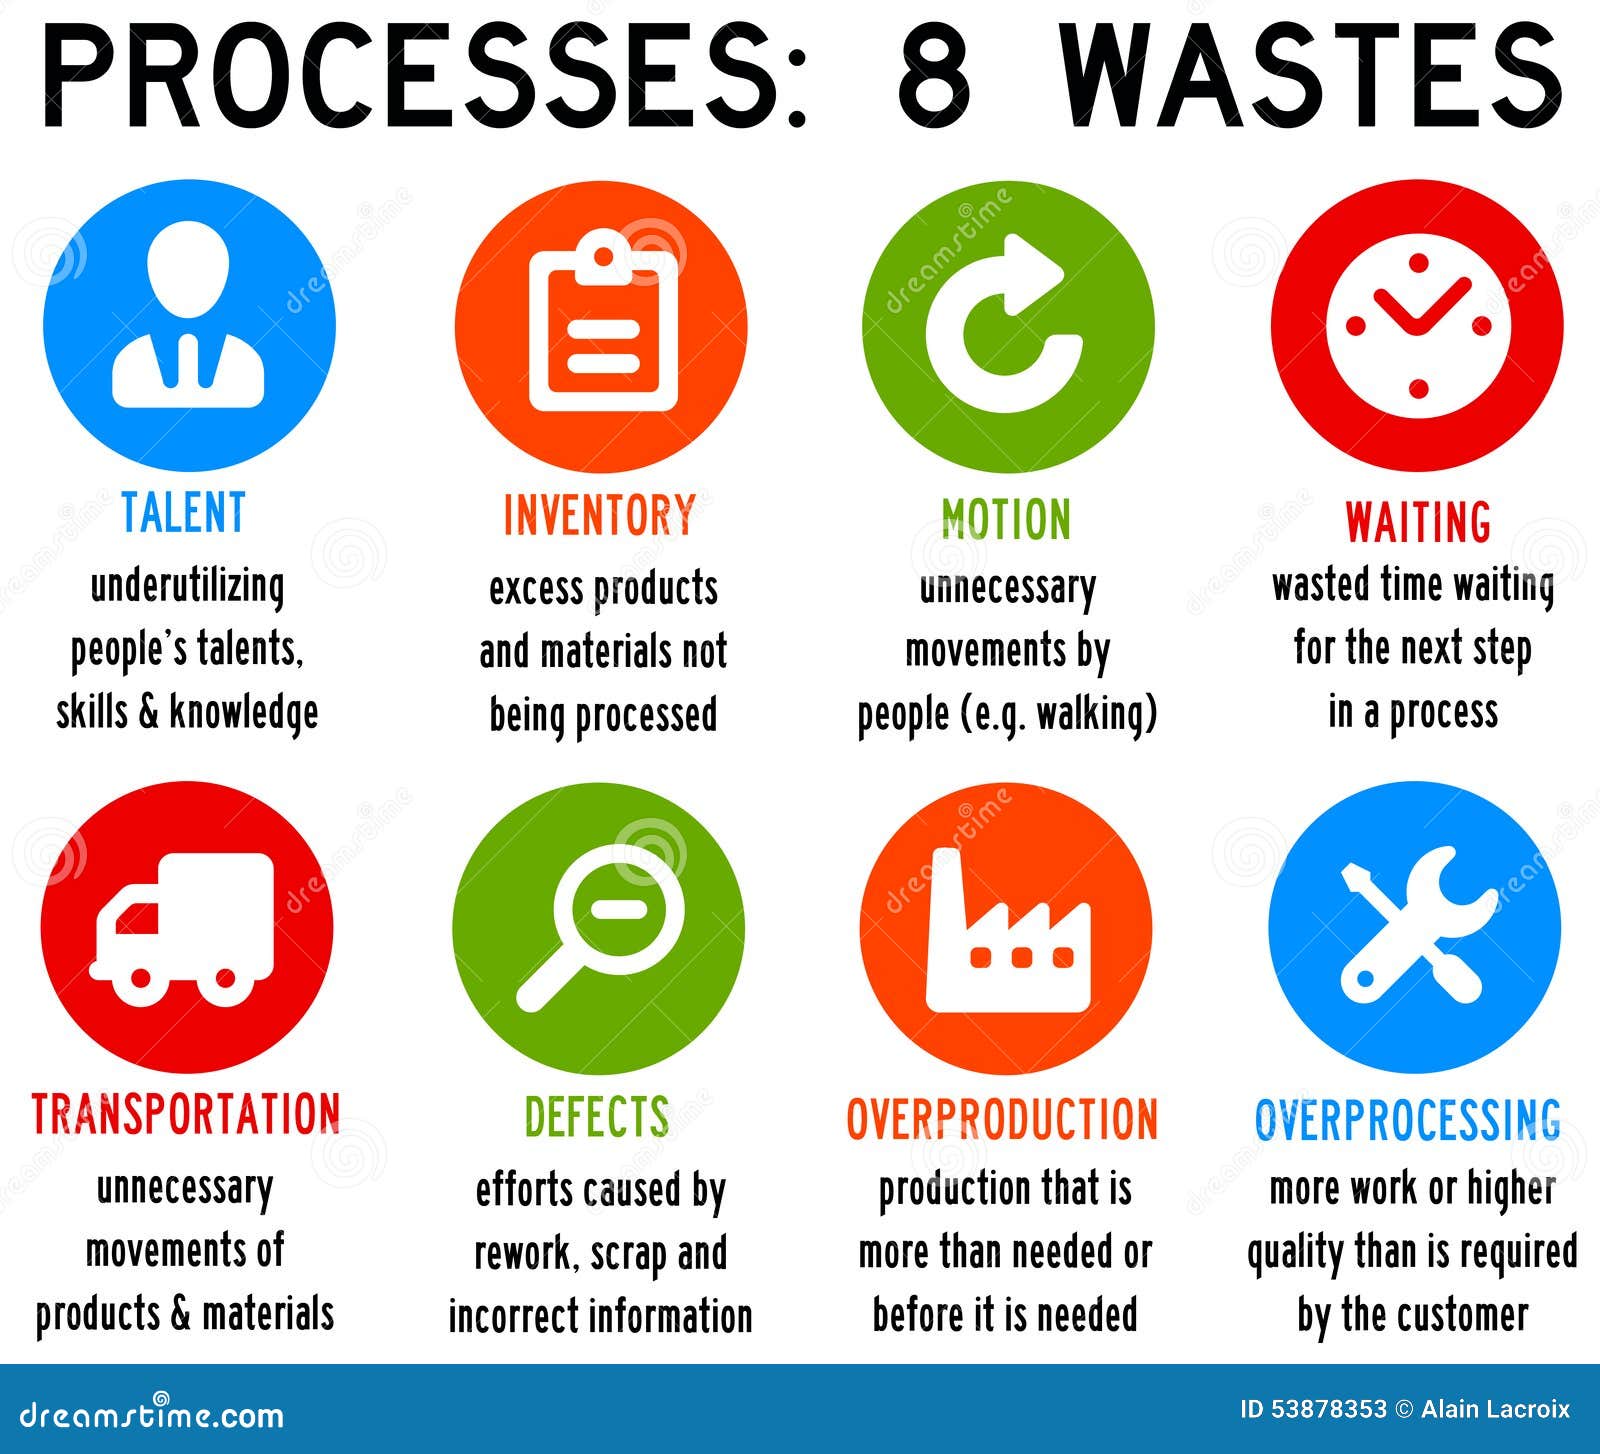 Process waste stock illustration. Illustration of evaluation - 53878353